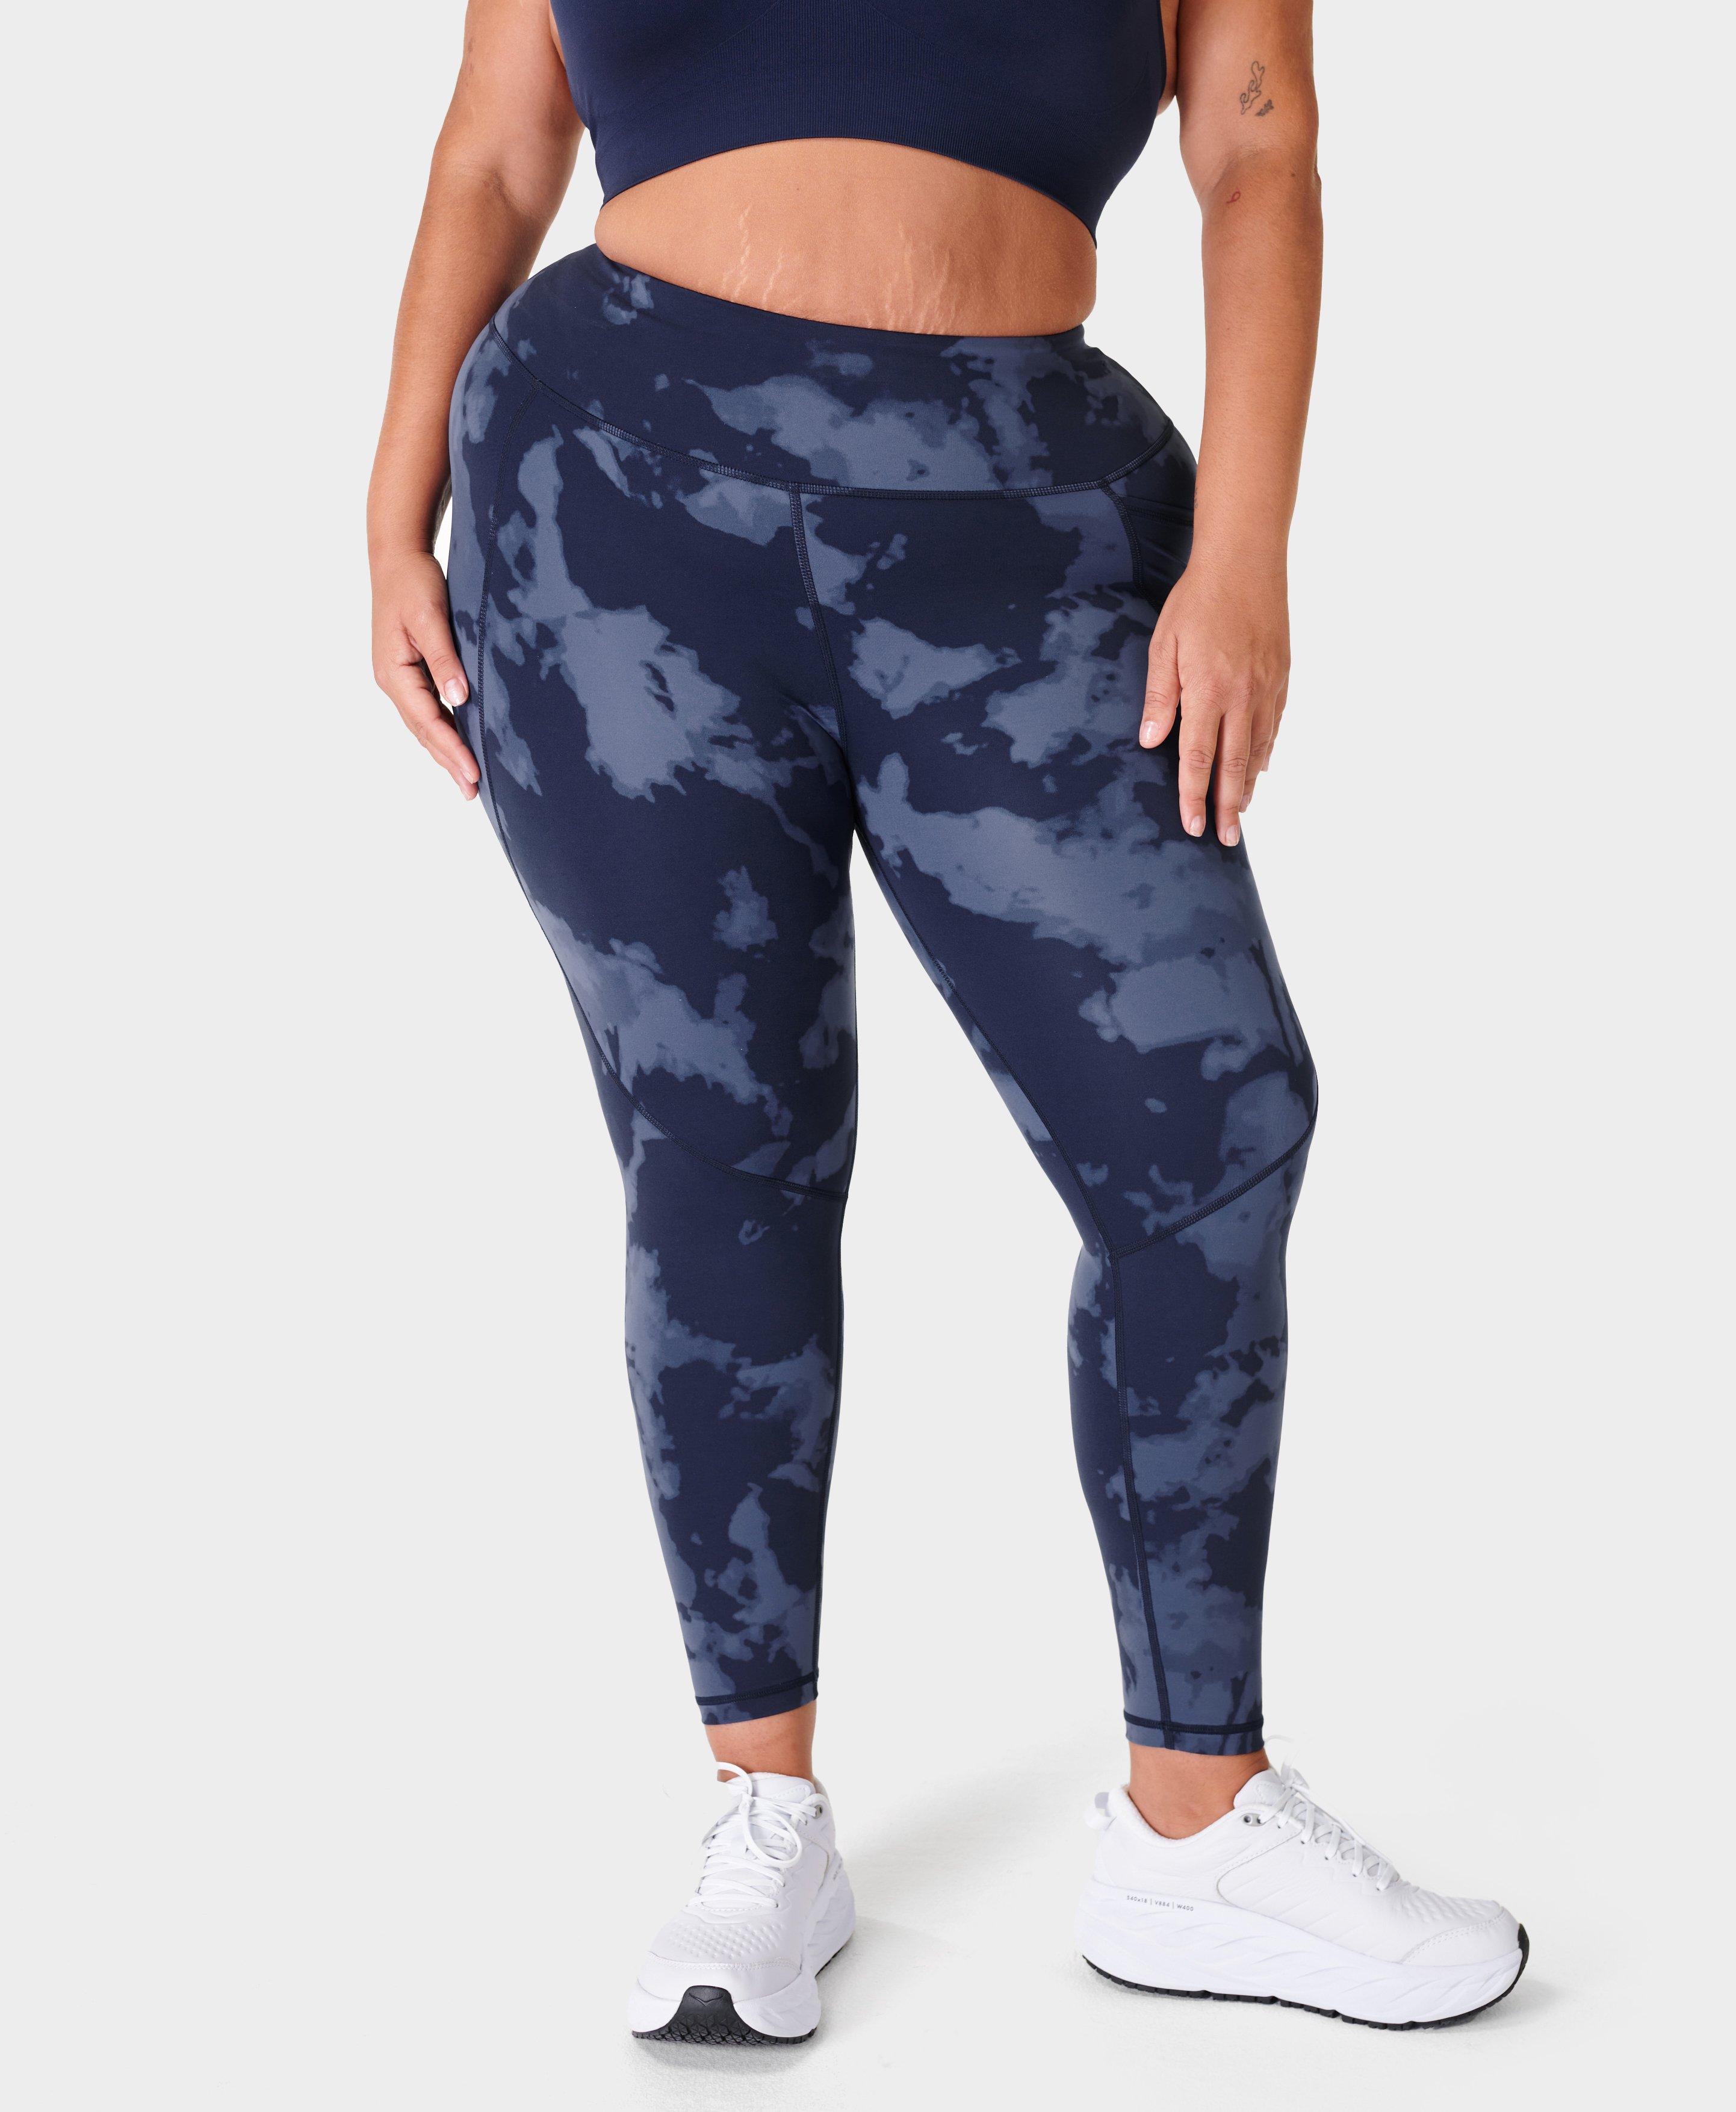 Sandals & Thongs  Sweaty Betty Womens Power 7/8 Workout Navy Camo Print Leggings  Navy Blue Camo Print ~ Kit Pappenheimer